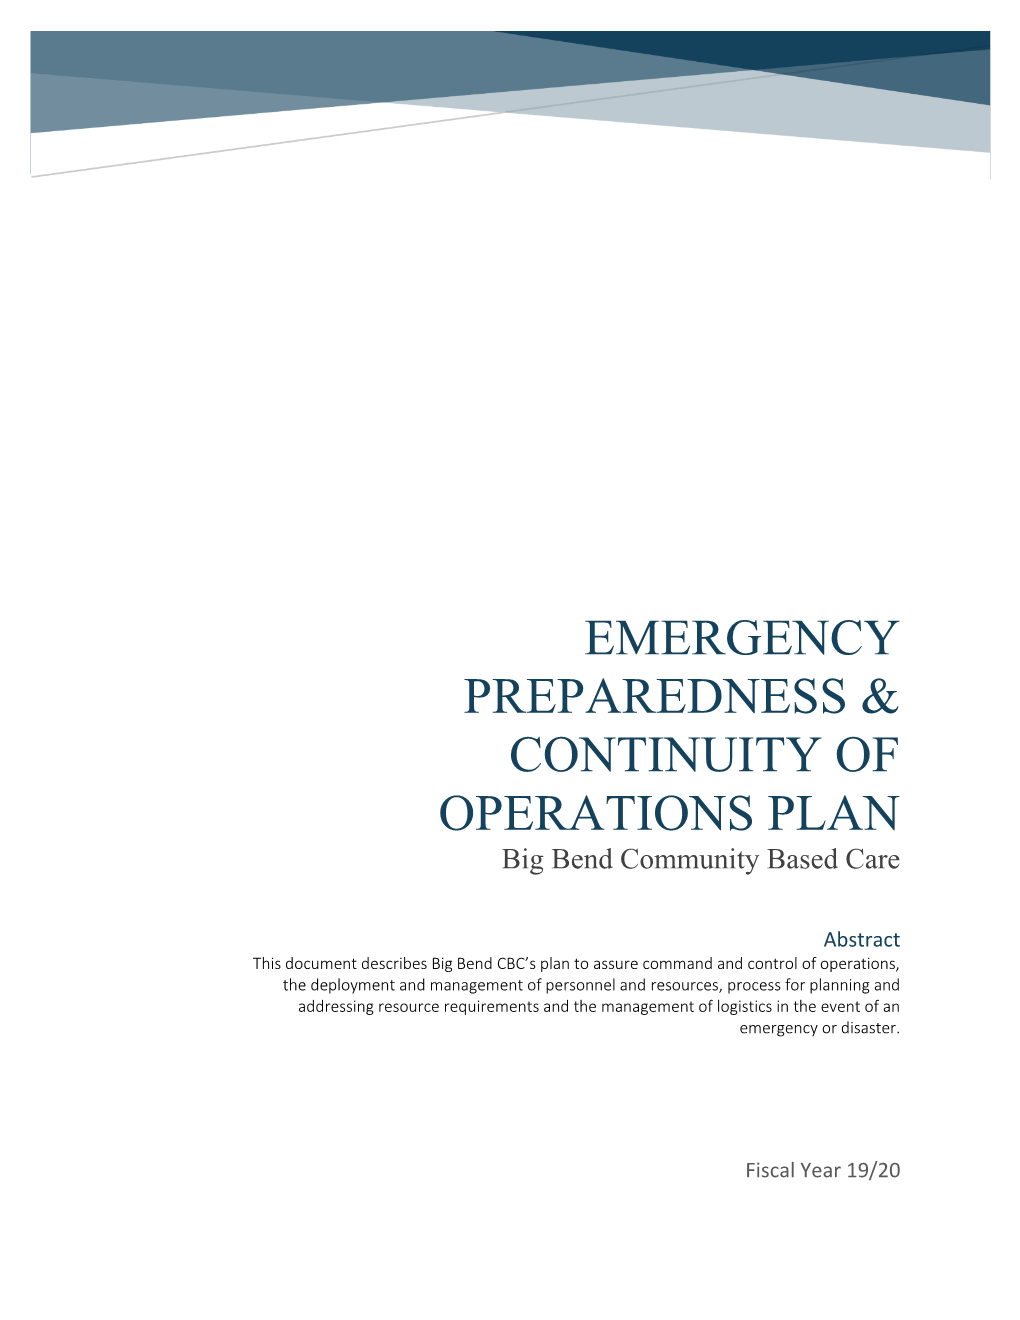 Emergency Preparedness & Continuity of Operations Plan